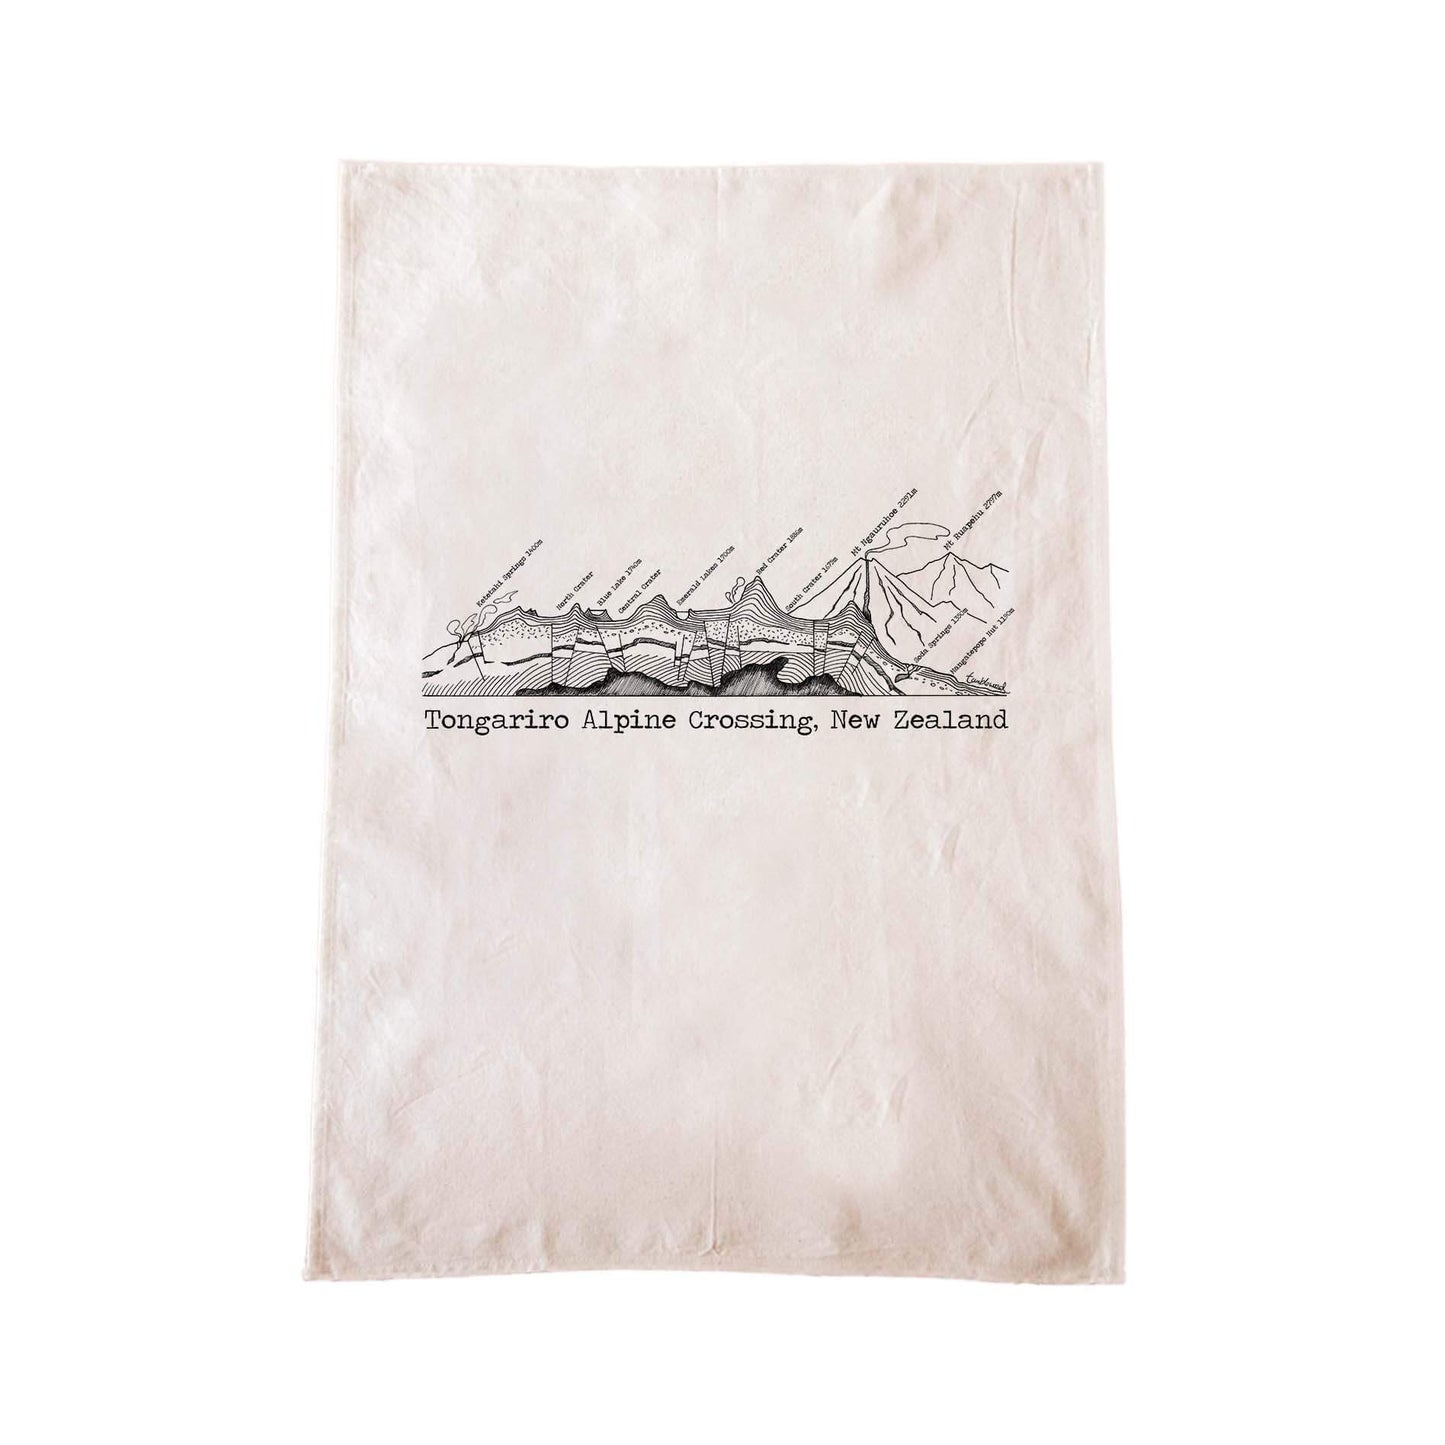 Off-white cotton tea towel with a screen printed Tui design.